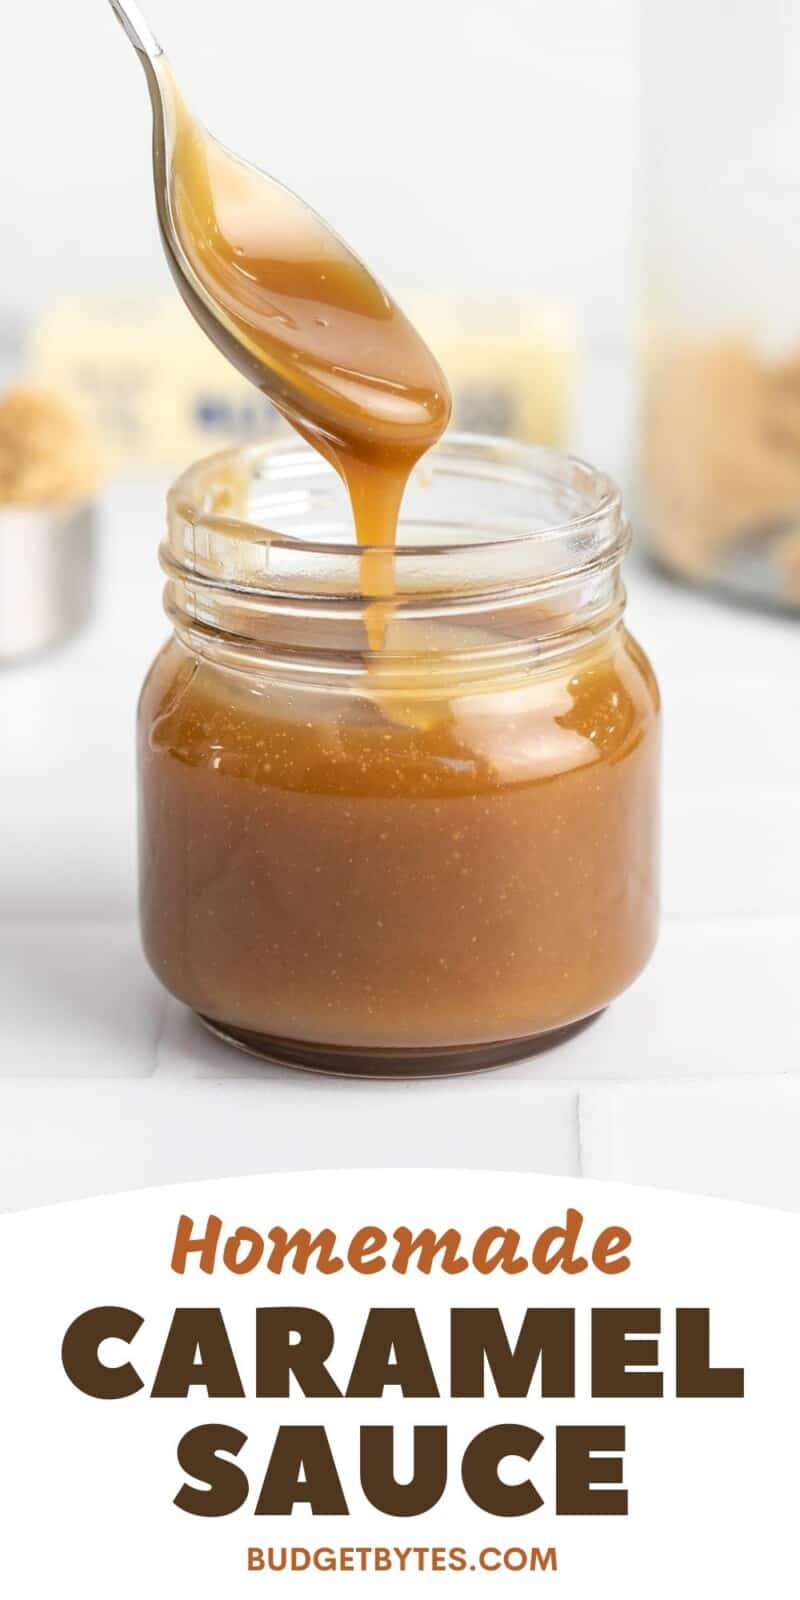 Side shot of a spoon drizzling caramel sauce in a mason jar.